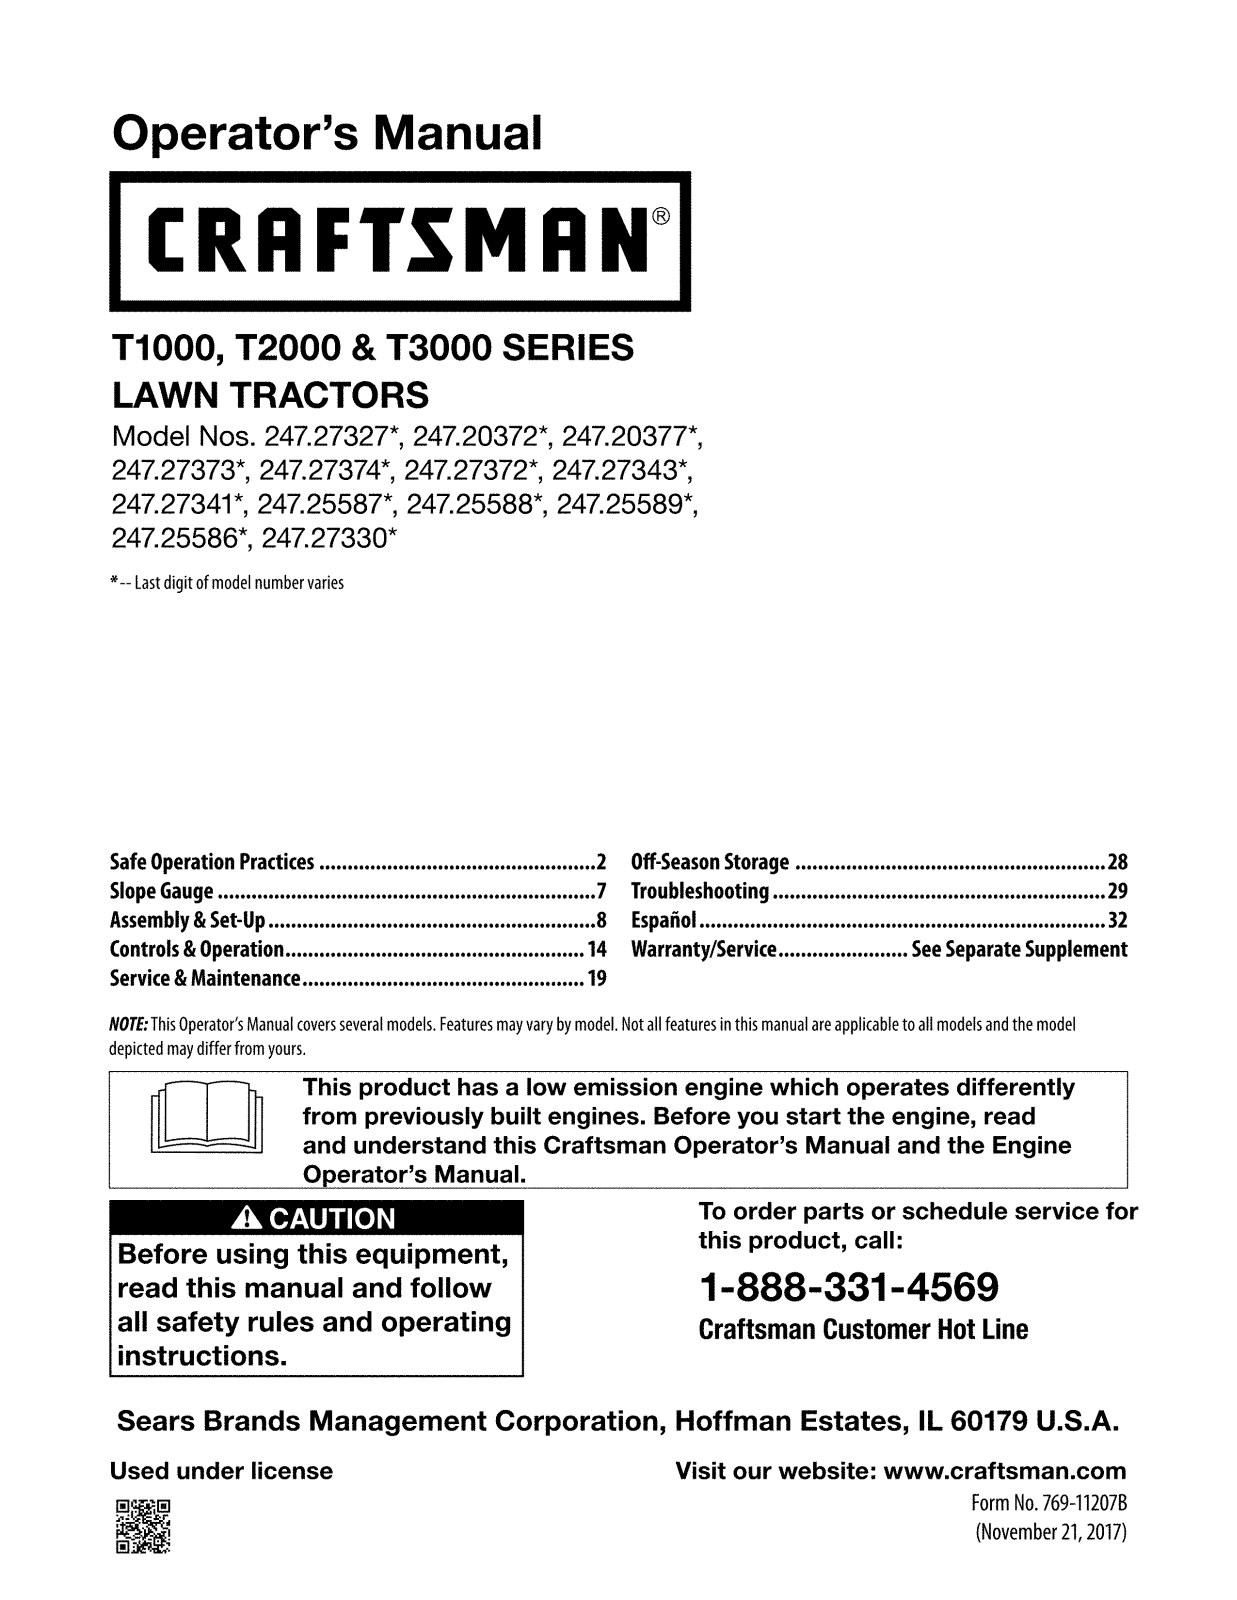 Craftsman 247255890, 247255880, 247255860, 247255870 Owner’s Manual